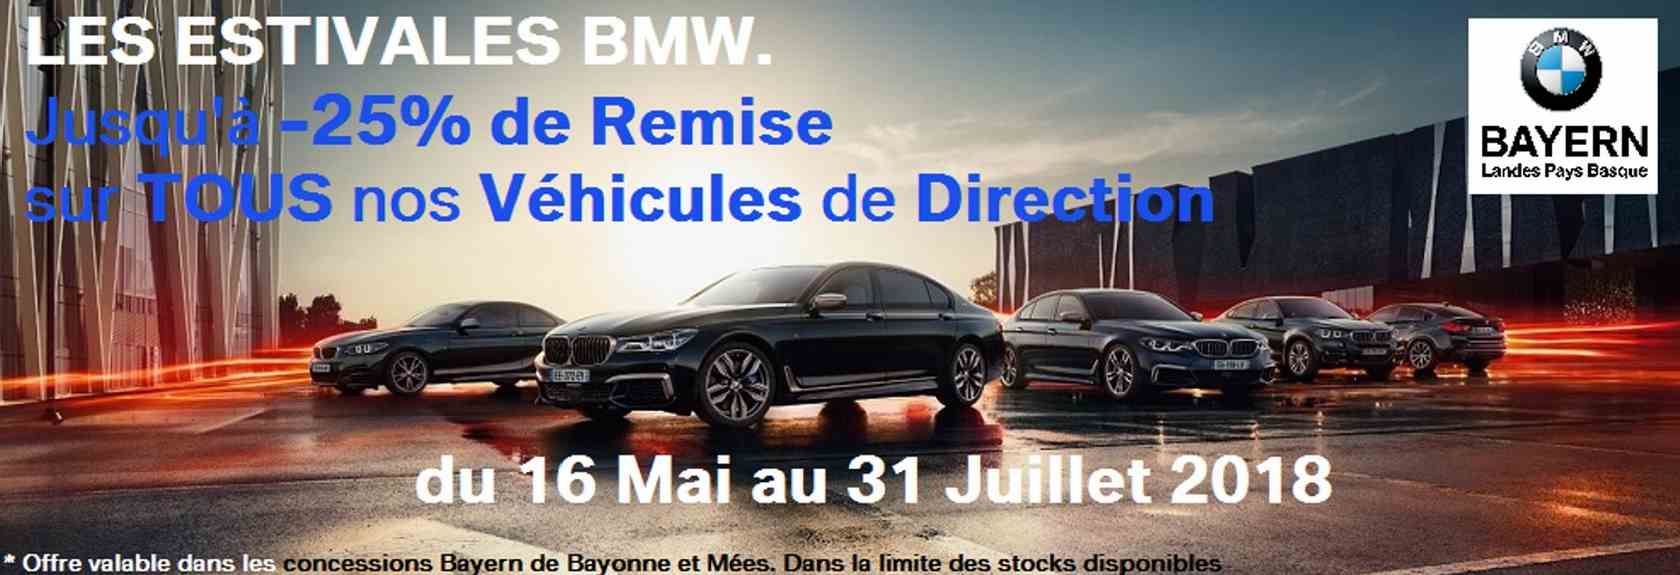 Les estivales BMW Bayern LPB